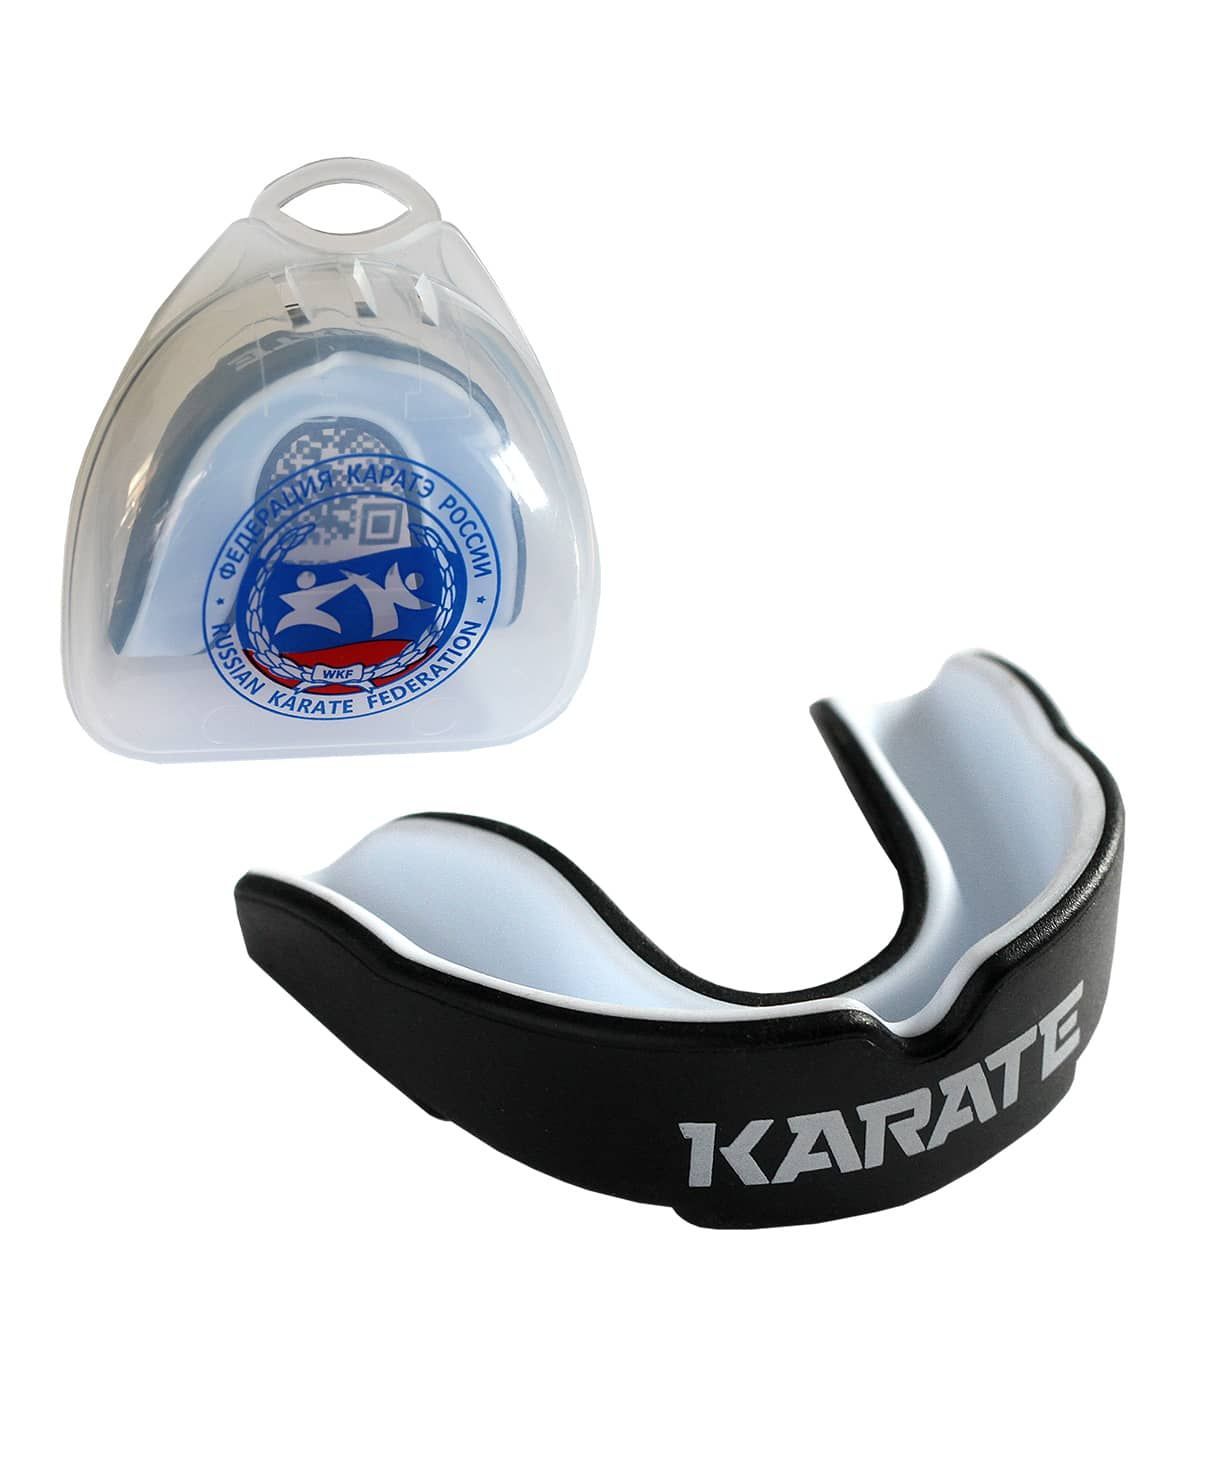 Капа Fight Expert - Karate MGX-003 kr blk, с футляром, черный/белый, детская